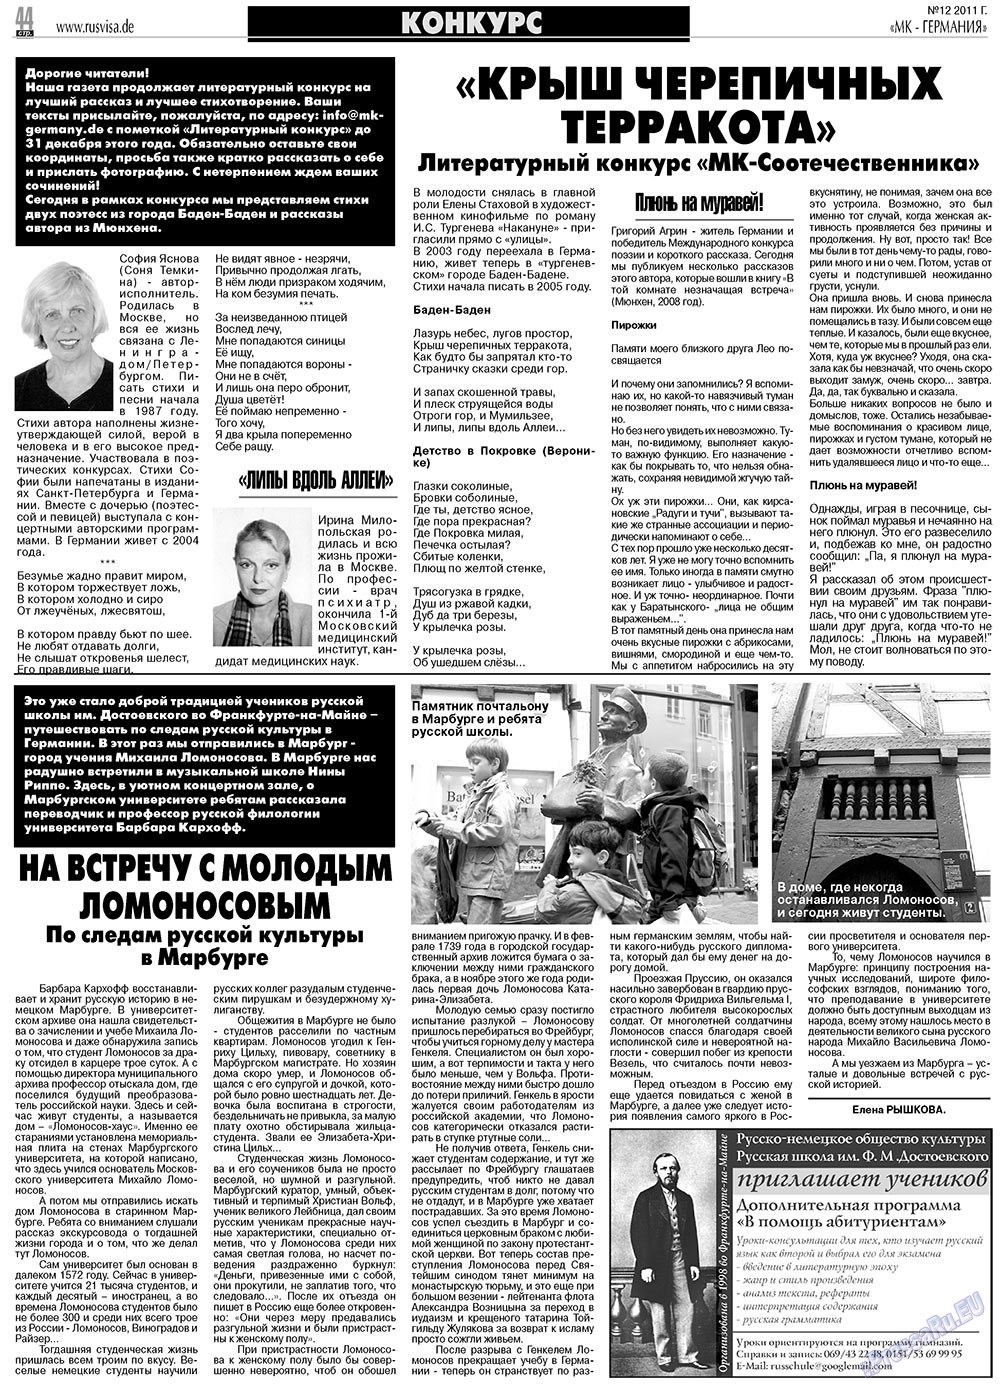 МК-Германия планета мнений, газета. 2011 №12 стр.44